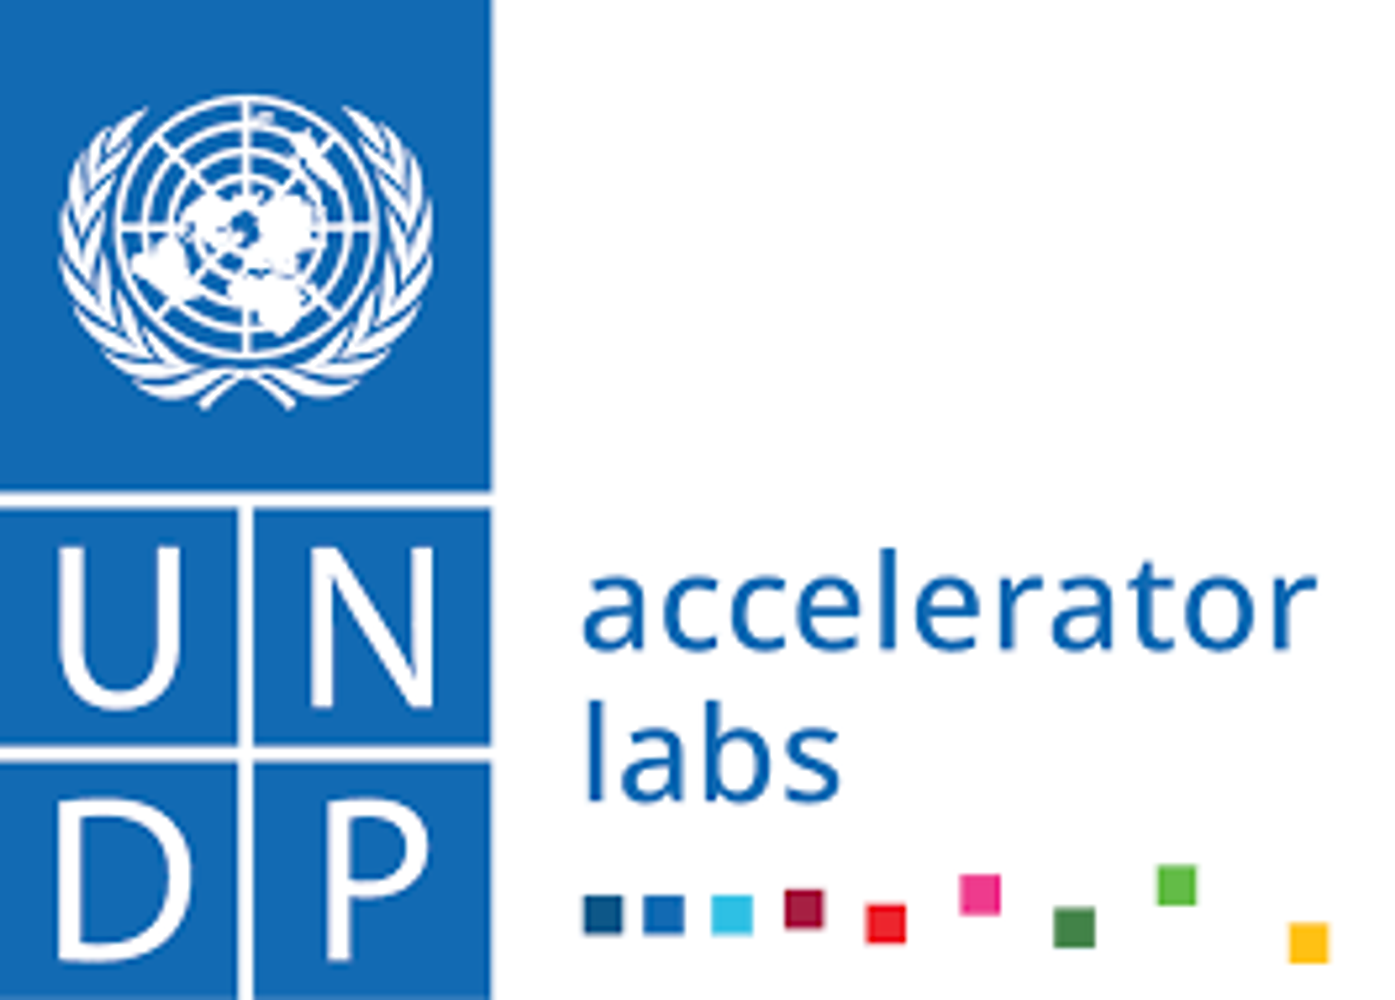 UNDP Accelerator labs